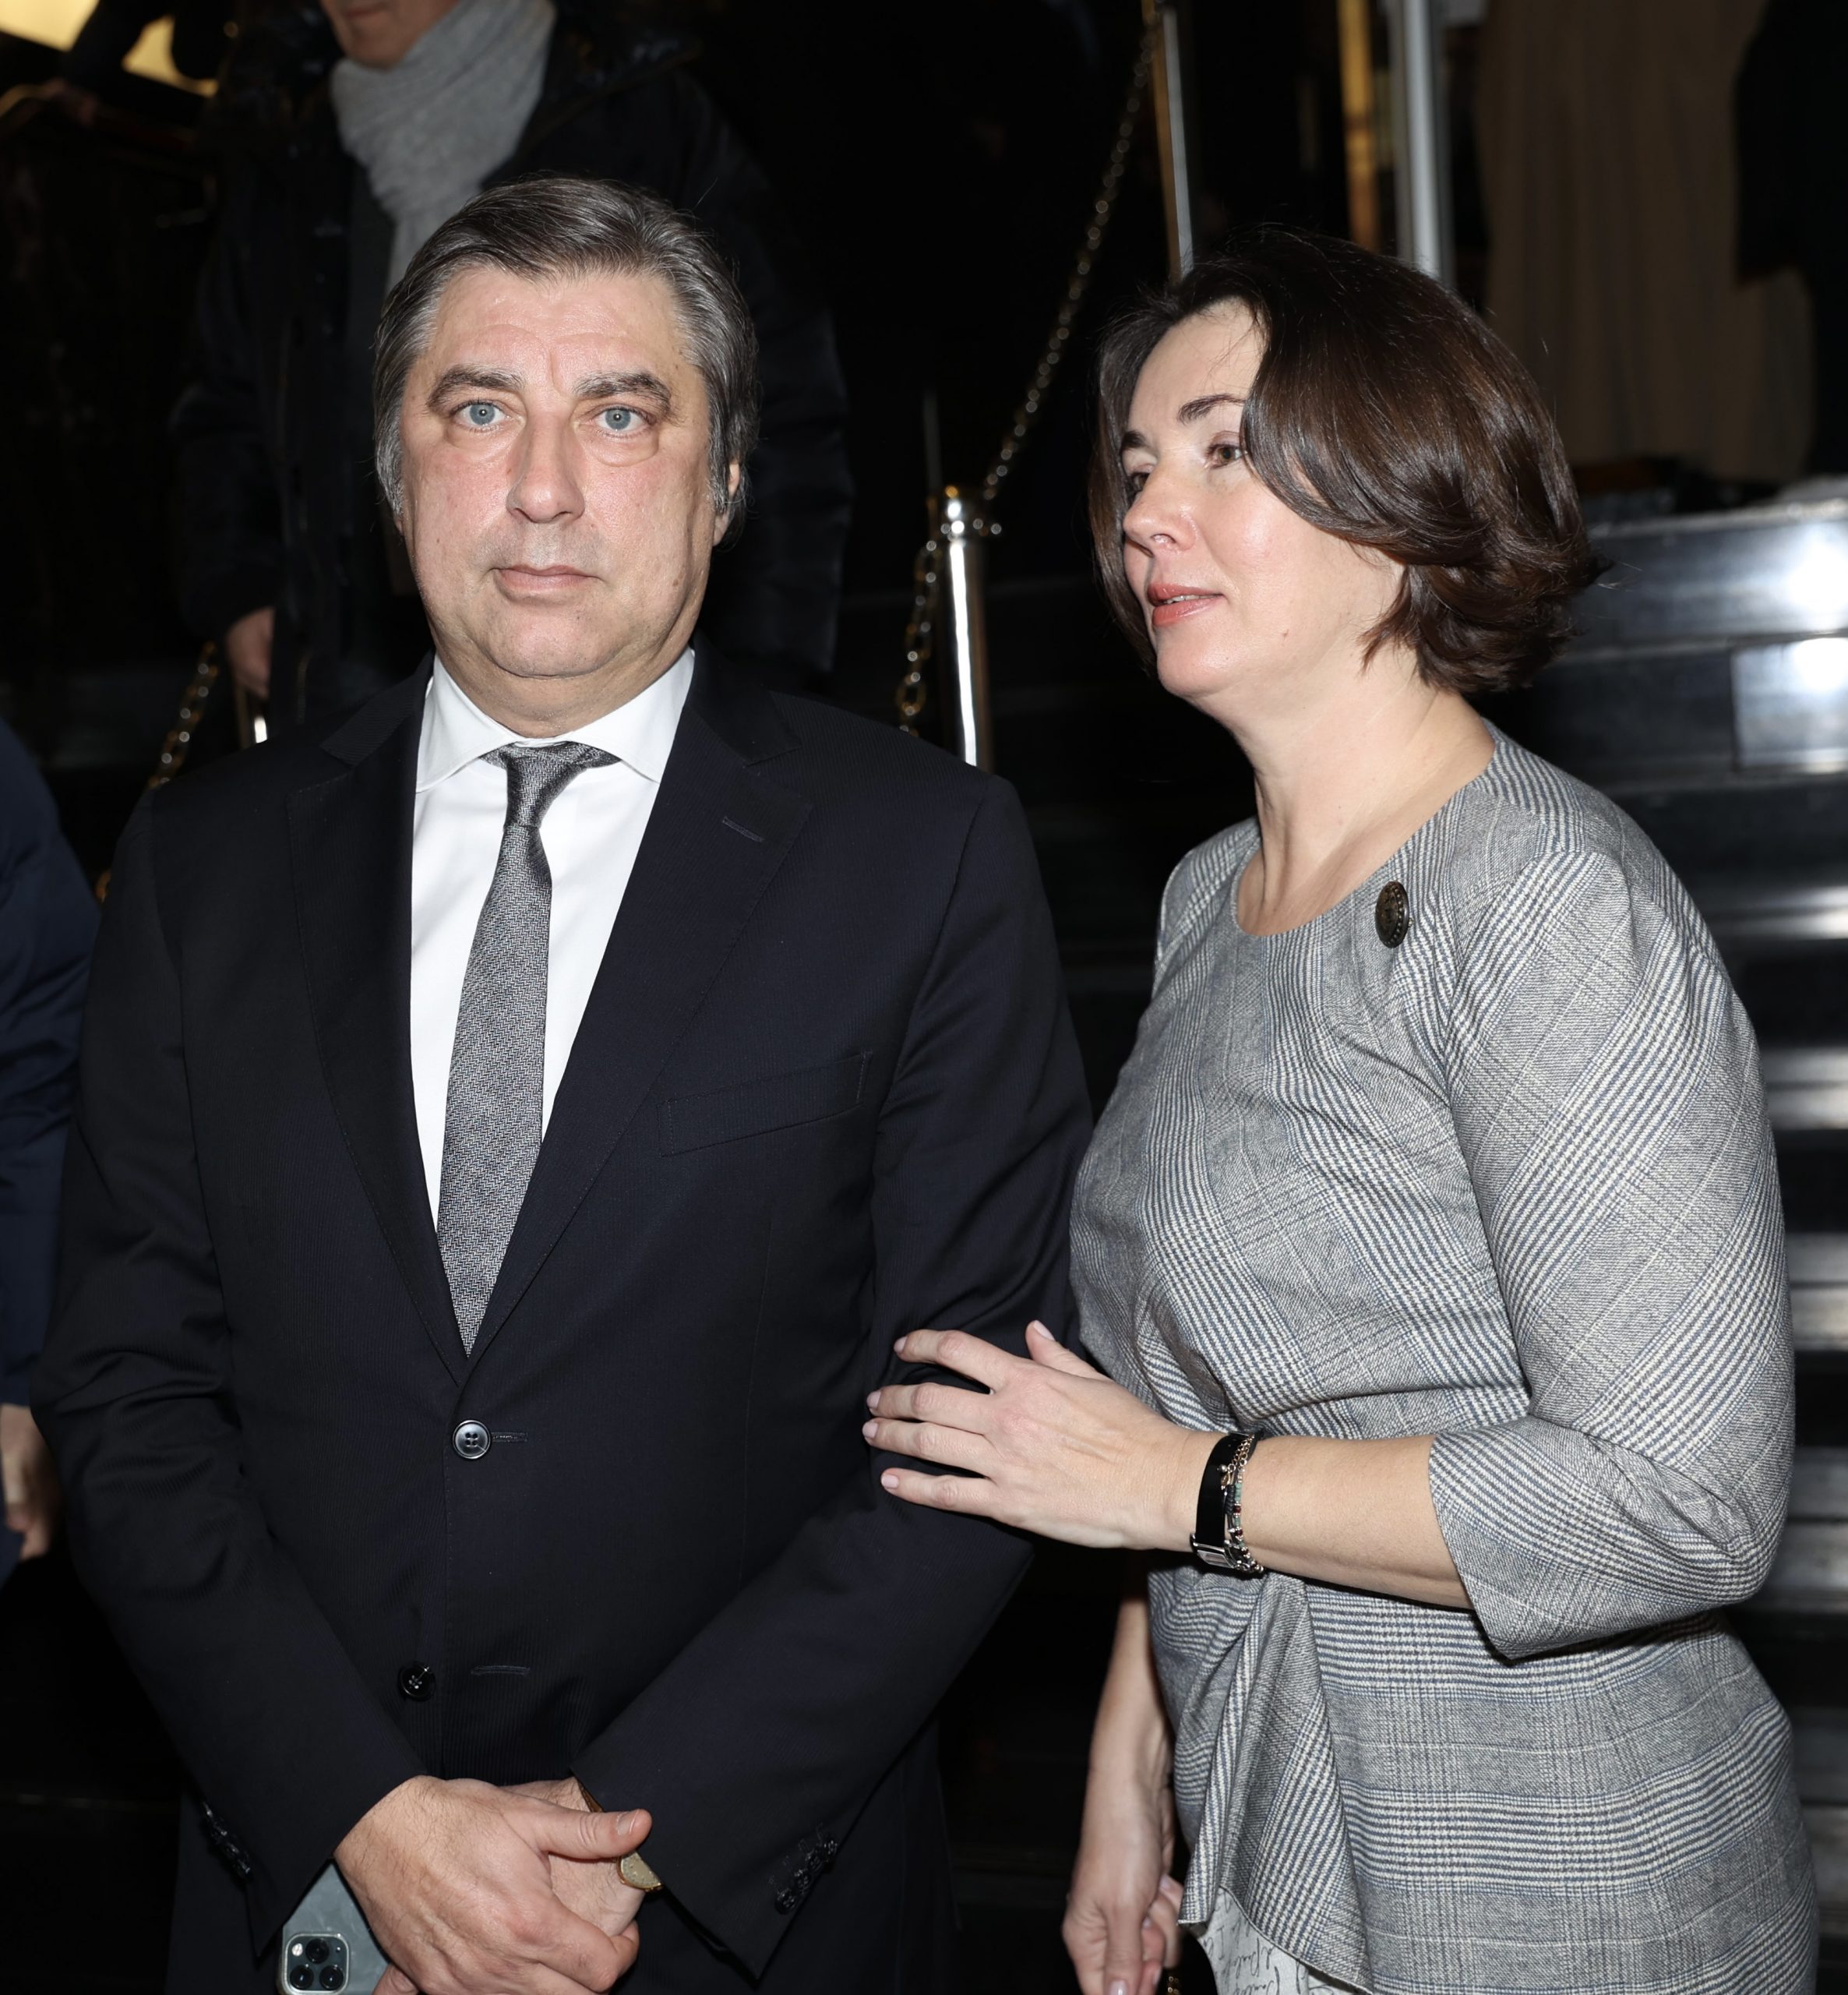 Ukrainian Ambassador to France Vadym Omelchenko and his wife at the premiere of BHL's film "Slava Ukraini" on 6 February 2023 at the Balzac. Photo: Igor Shabalin